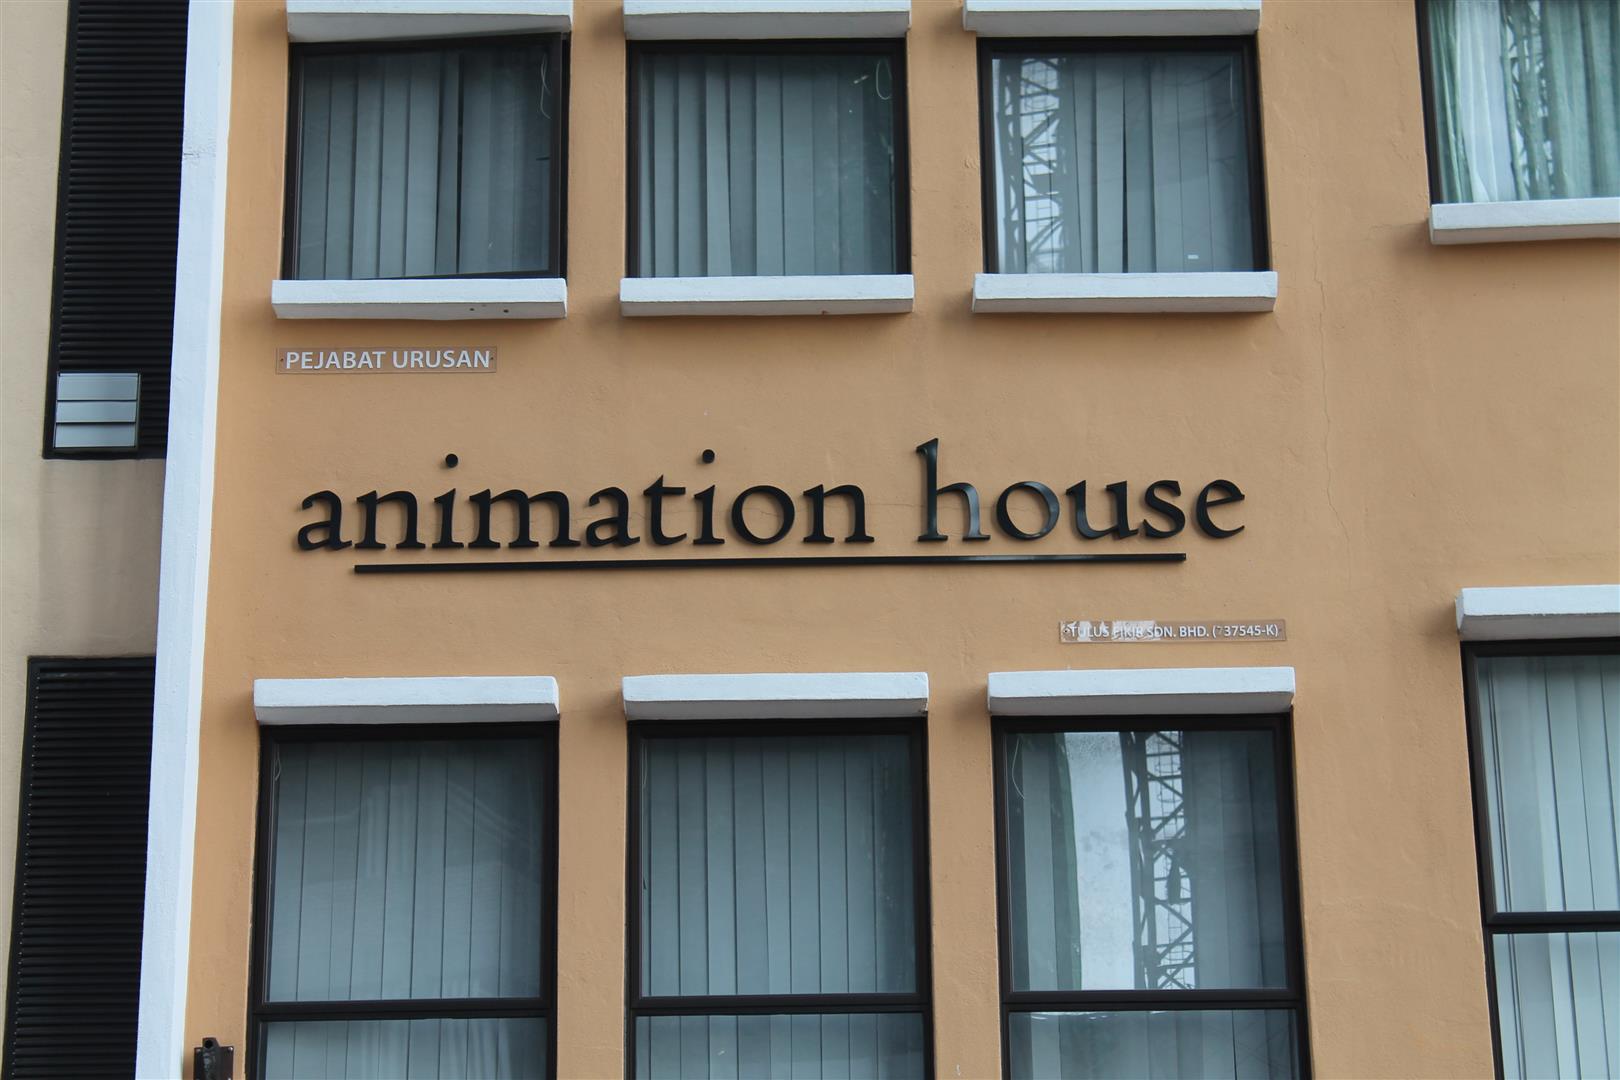 Tulus Fikir - Visit to Local Animation Company 29